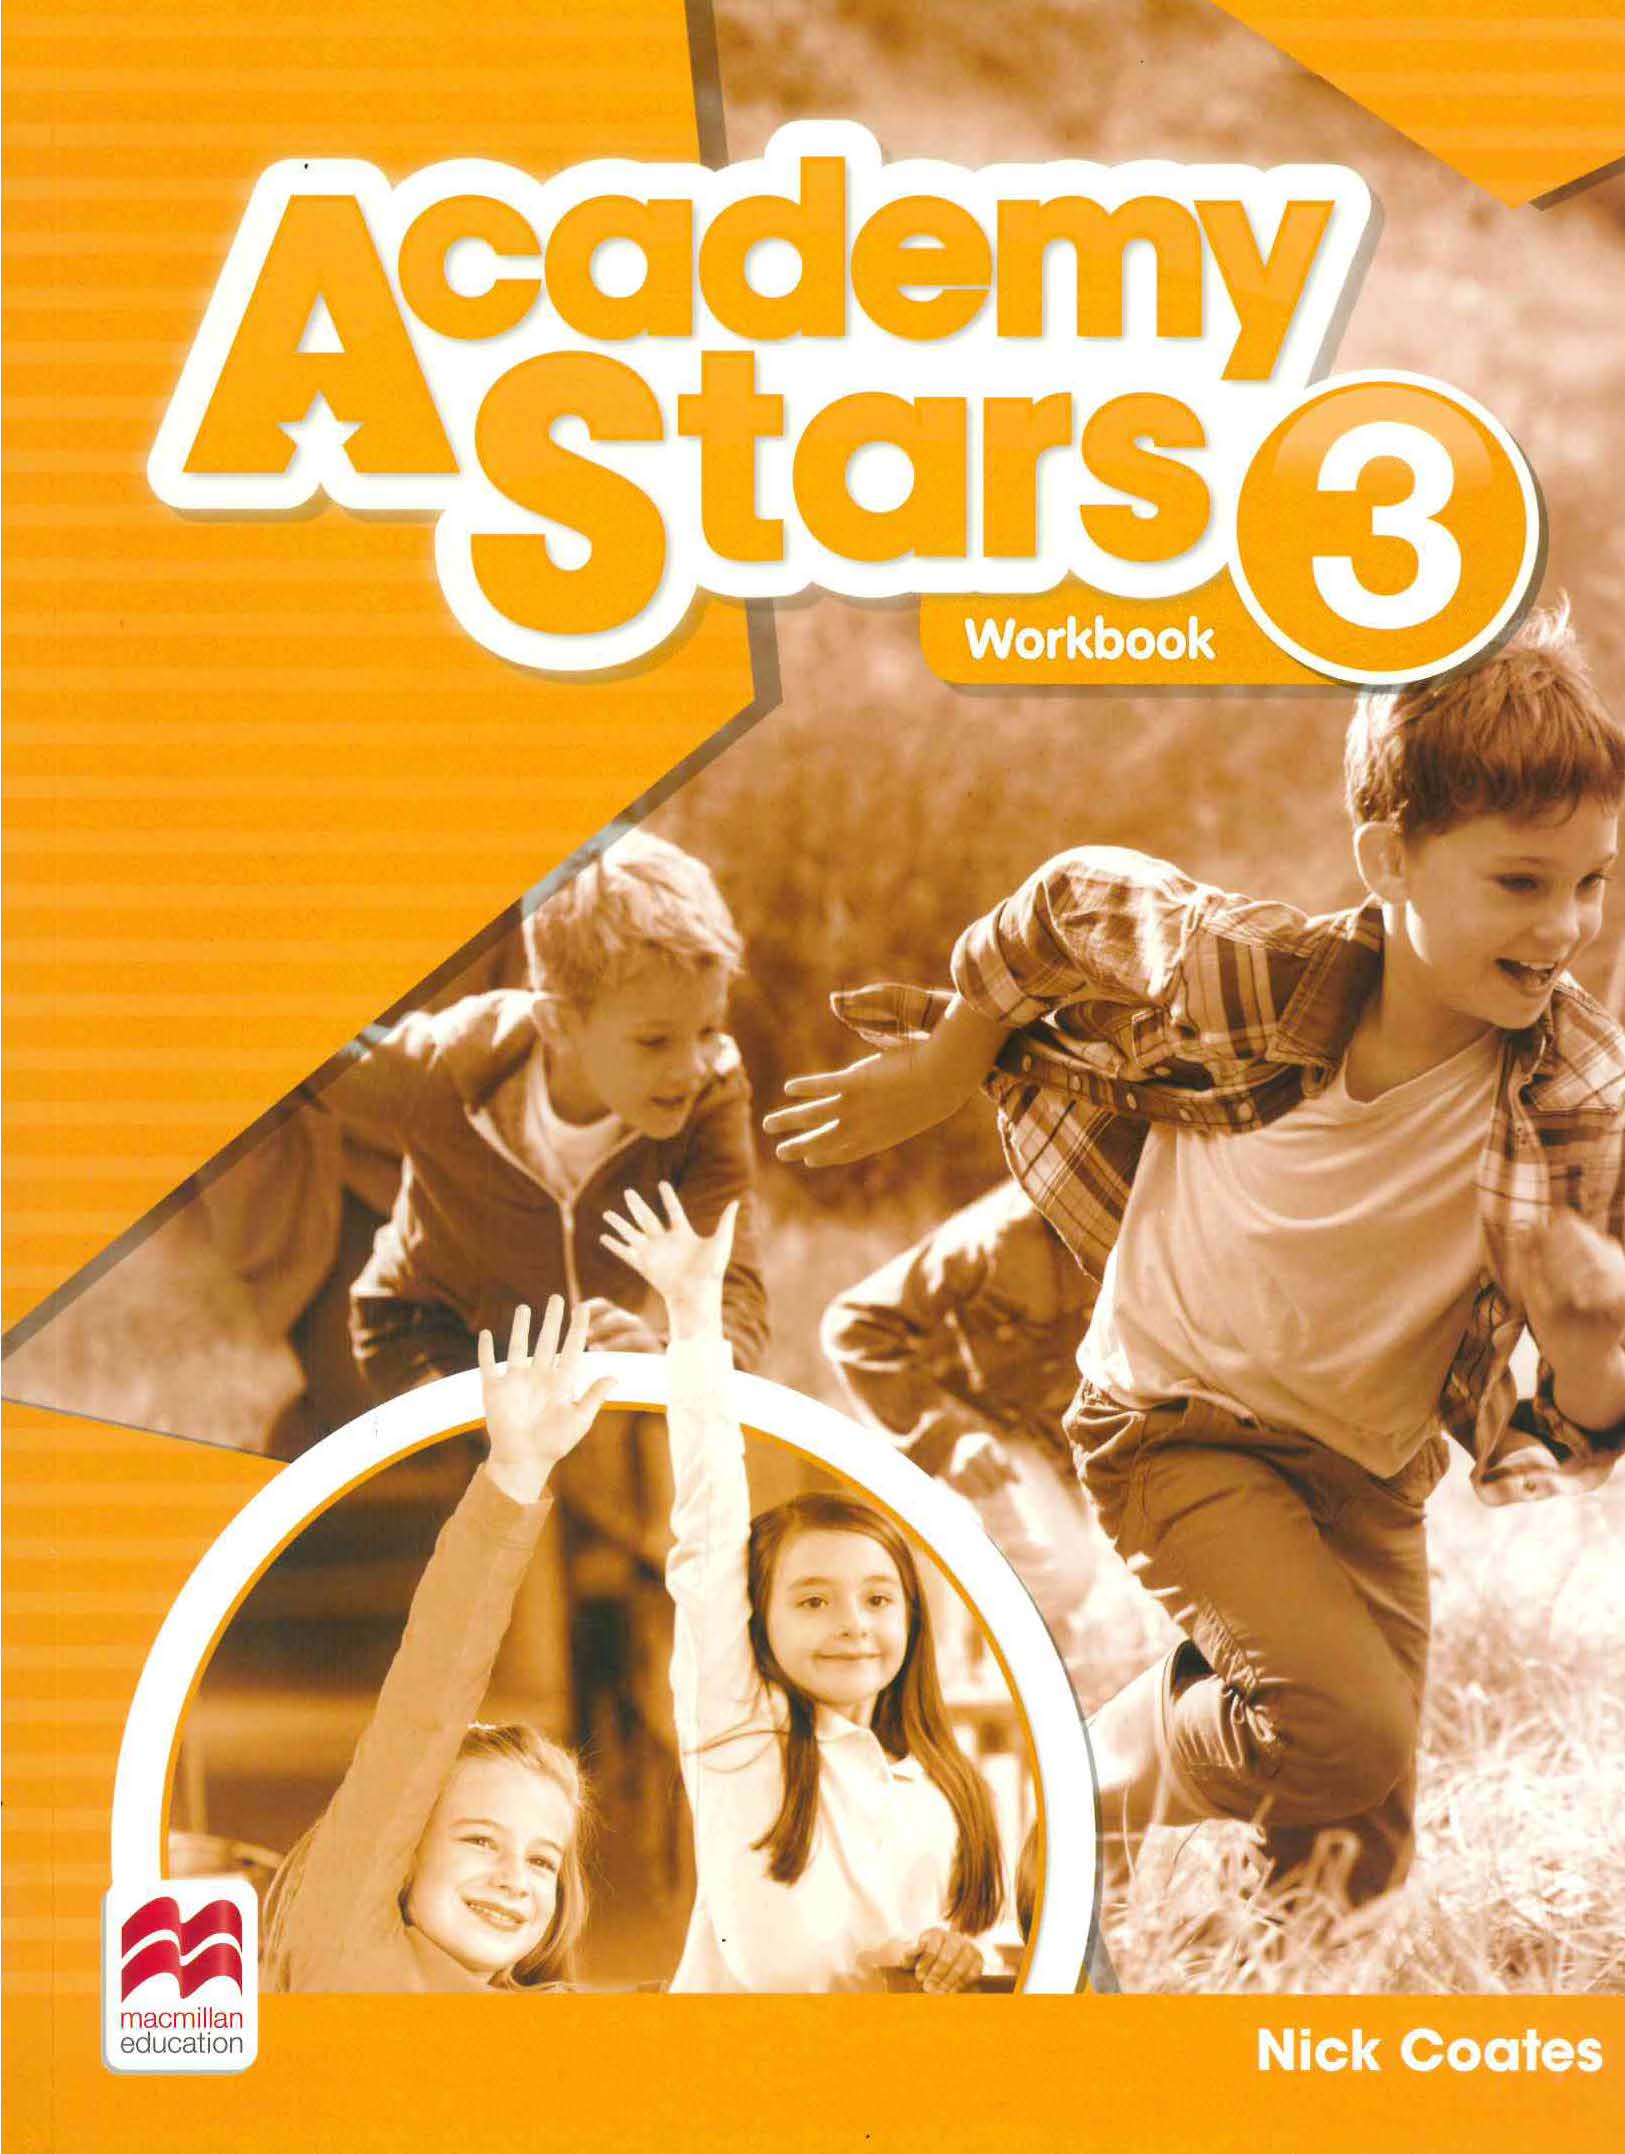 Academy Stars 2nd Edition